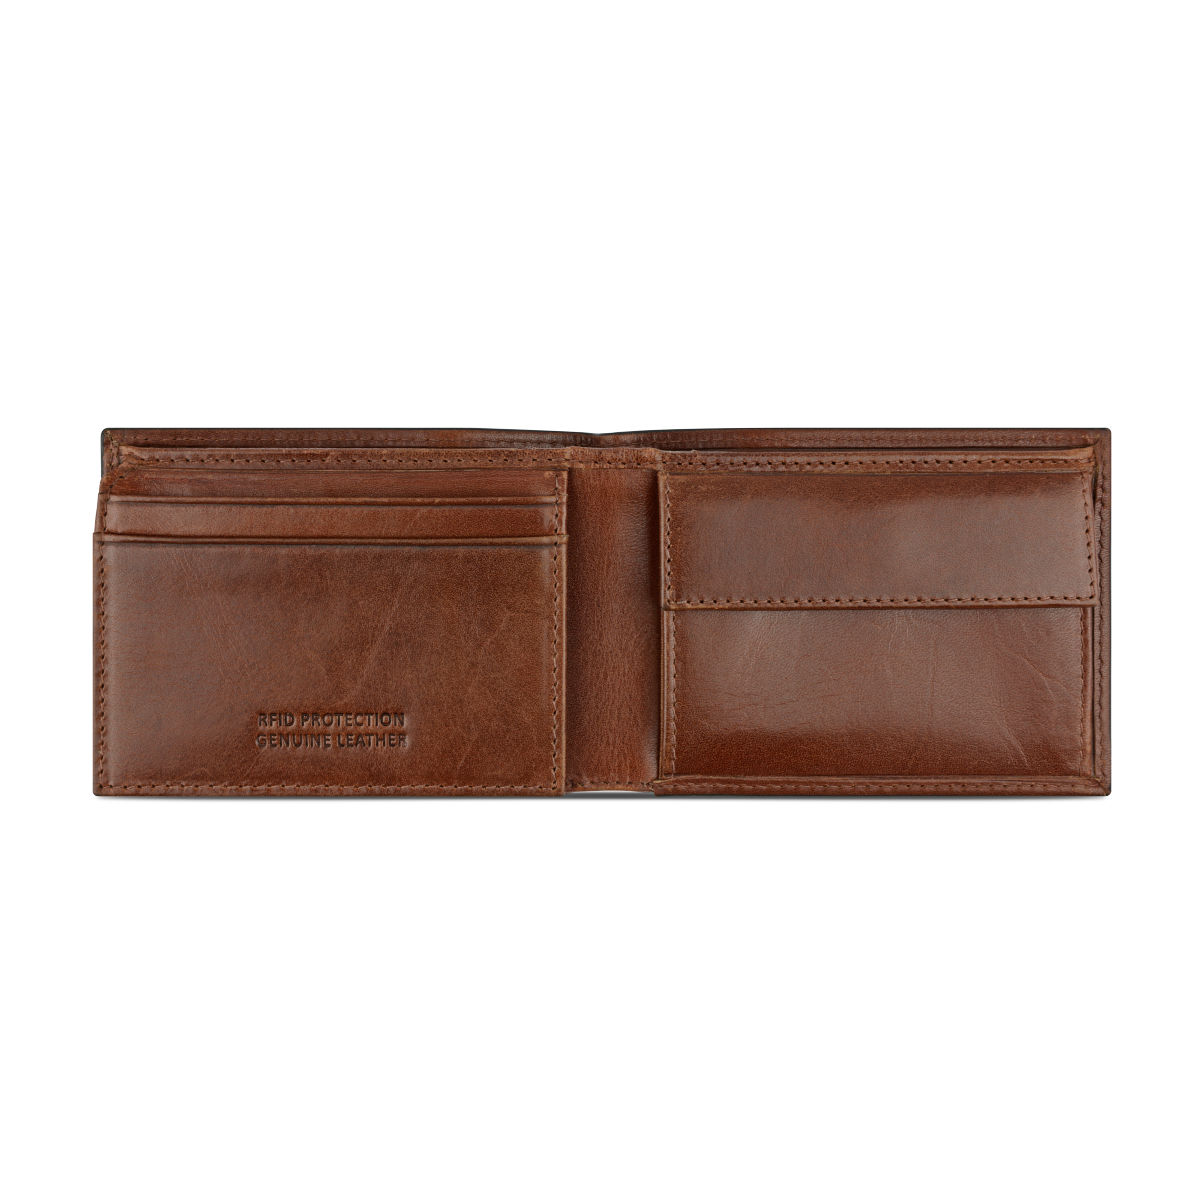 Bugatti men\'s wallet brown - cognac leather